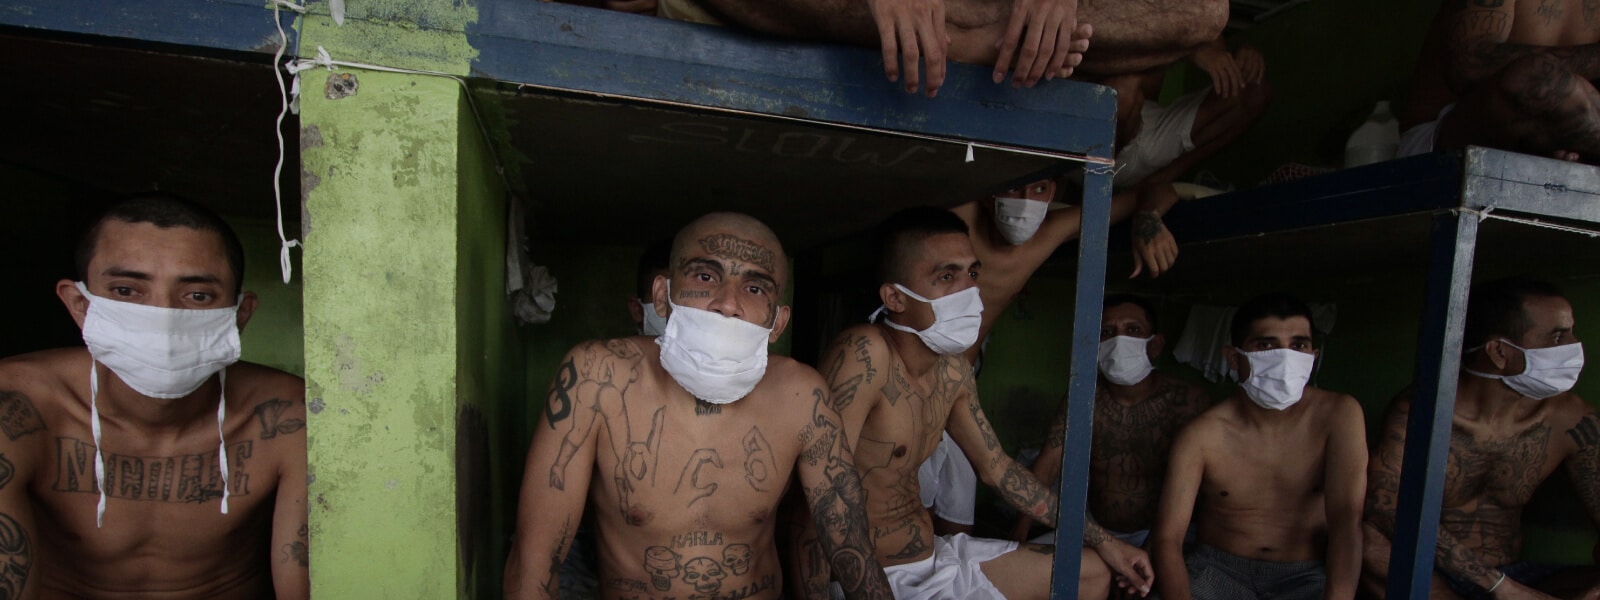 1.-El-Salvador_Imprisoned-gang-members-wearing-protective-face-masks-sit-inside-a-group-cell_AP_20335158061131_2020_Gamechangers.jpg